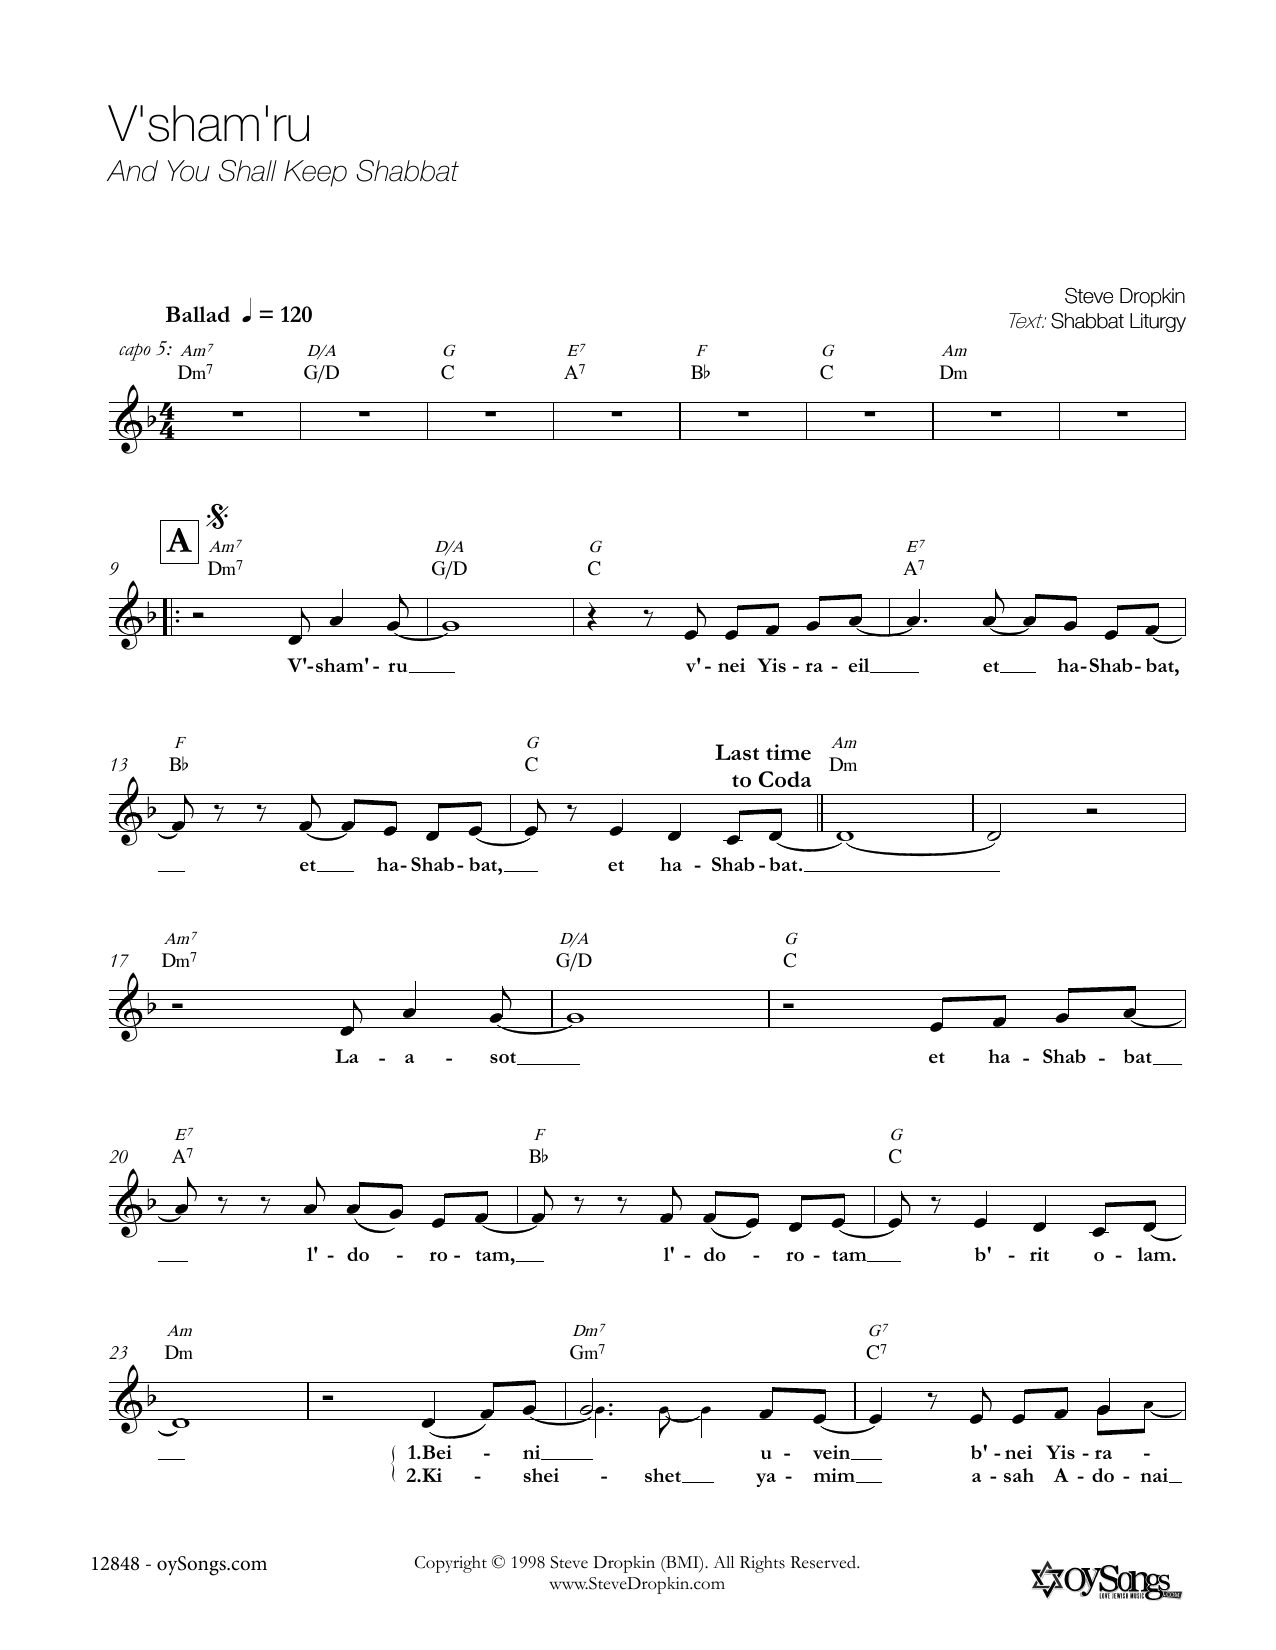 Steve Dropkin V'Sham'Ru Sheet Music Notes & Chords for Piano, Vocal & Guitar (Right-Hand Melody) - Download or Print PDF